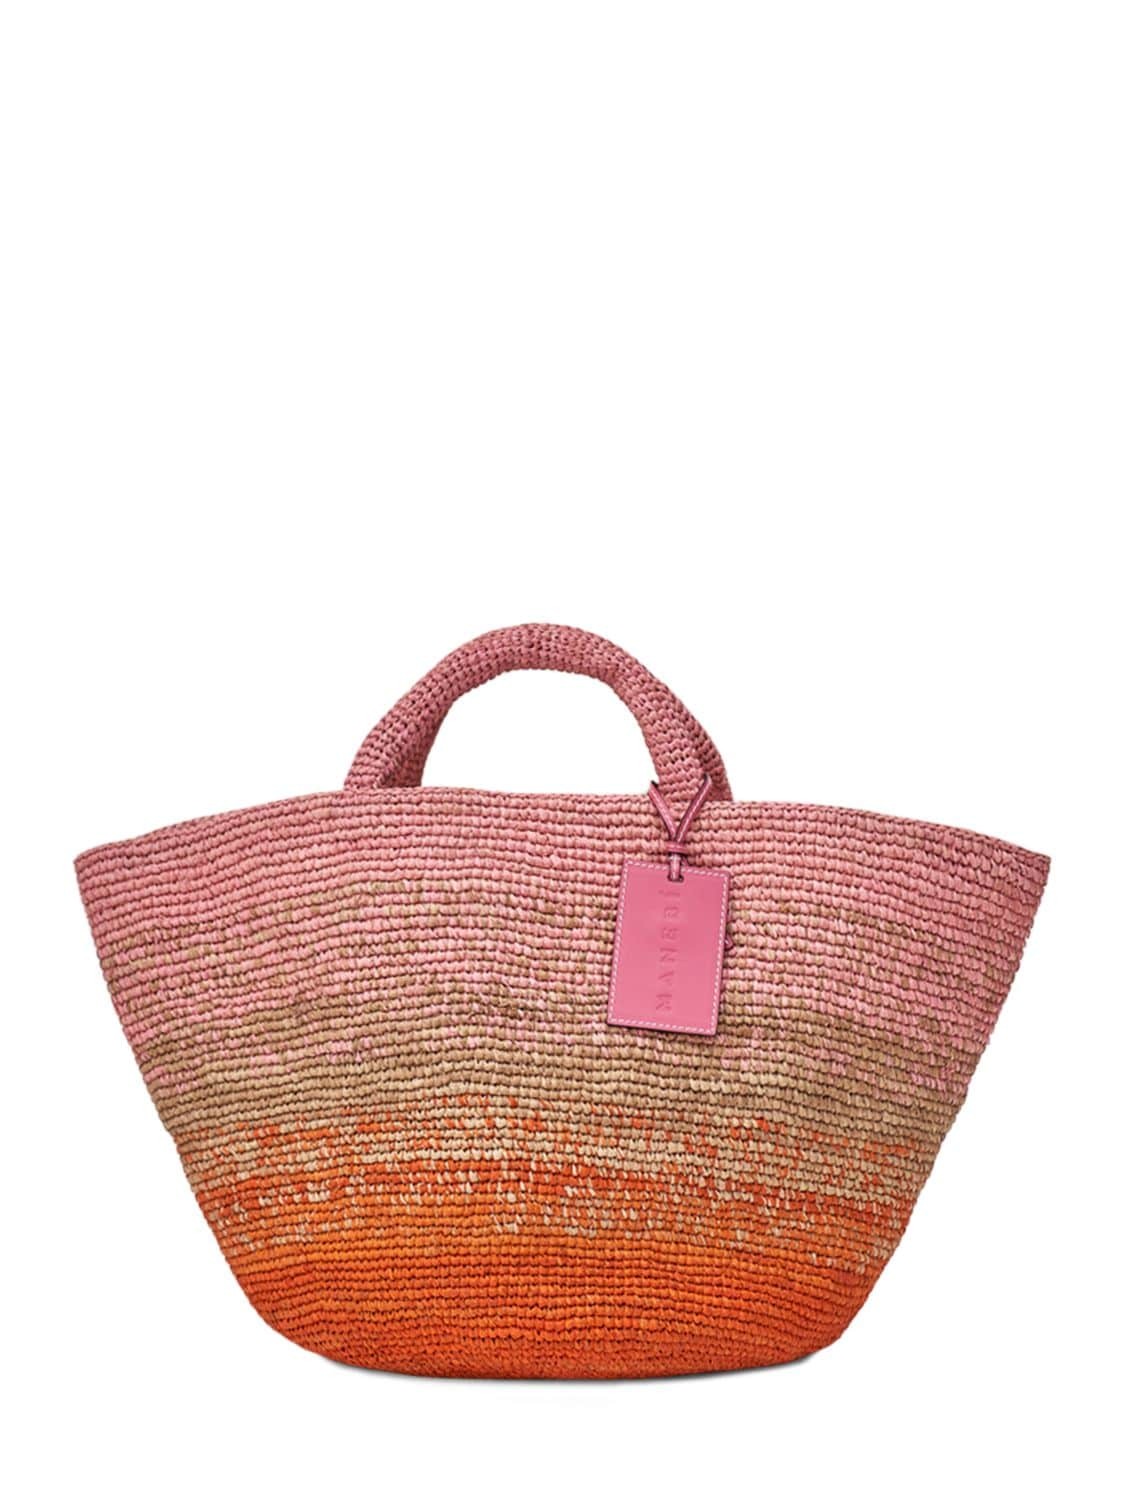 MANEBÌ Panier Raffia Tote Bag in orange / pink